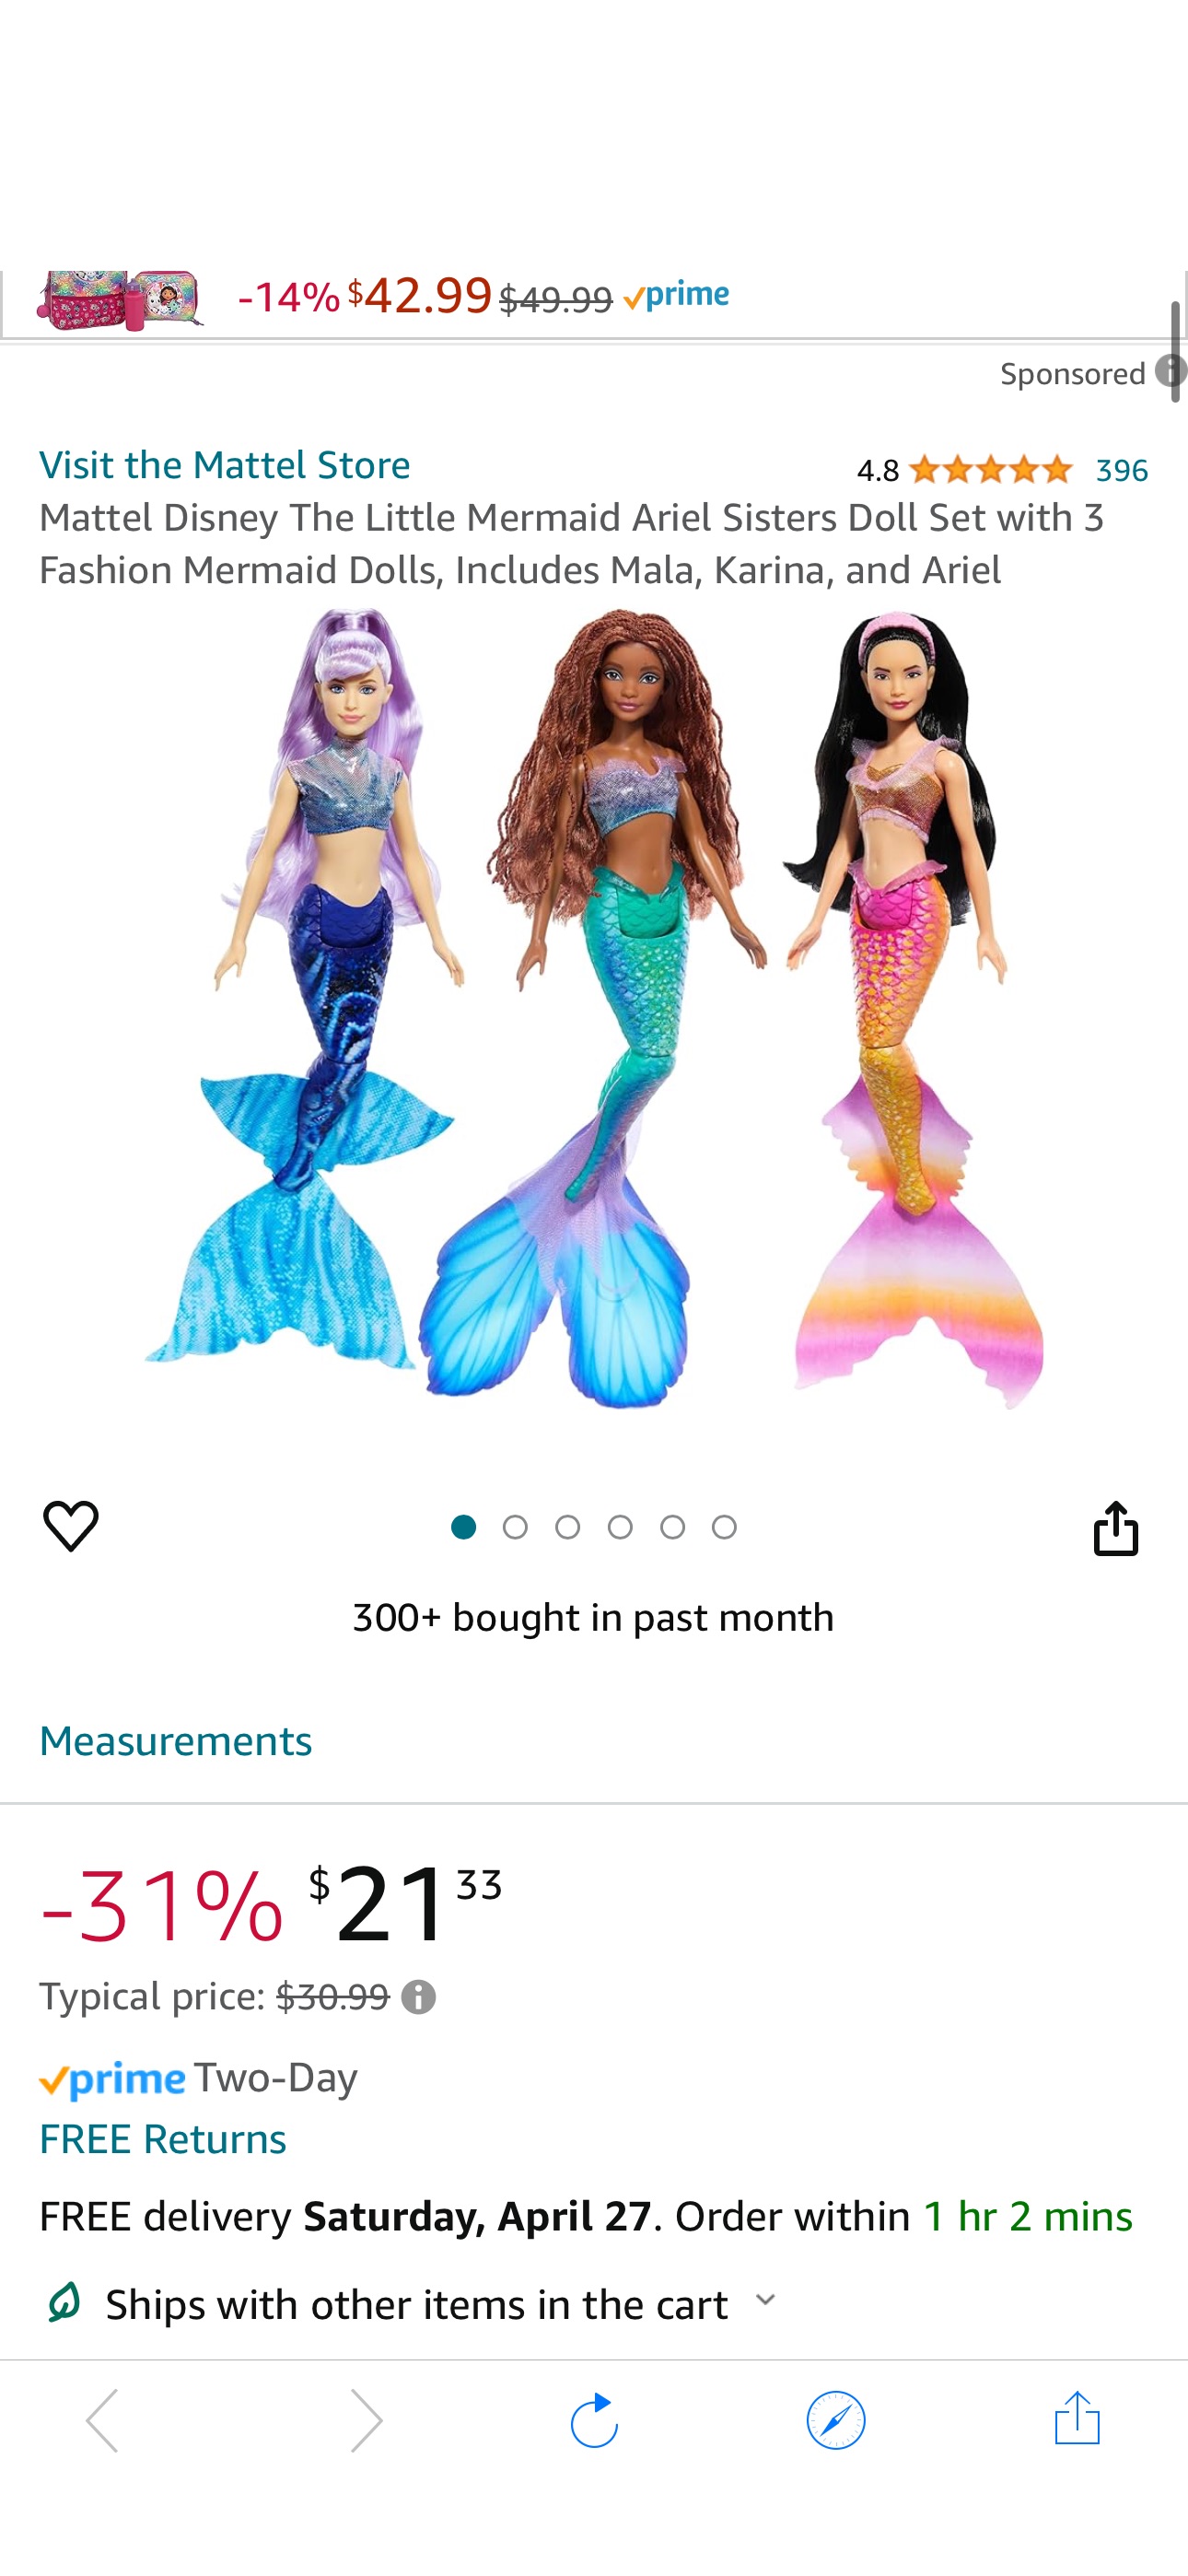 Amazon.com: Mattel Disney The Little Mermaid Ariel Sisters Doll Set with 3 Fashion Mermaid Dolls, Includes Mala, Karina, and Ariel : Toys & Games